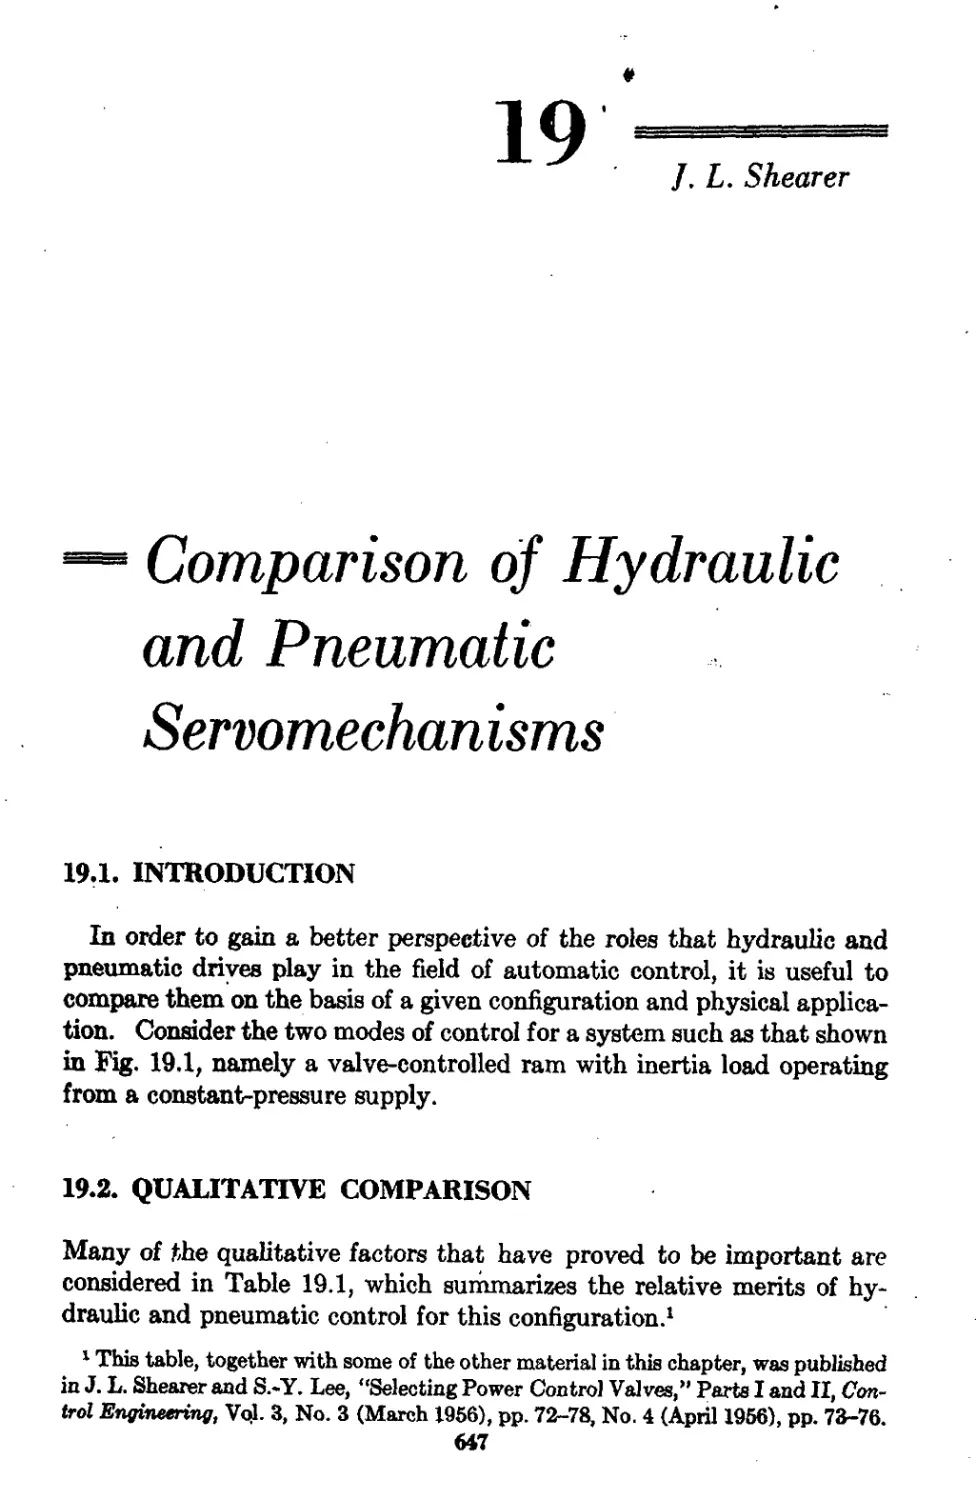 Chapter 19 Comparison of Hydraulic and Pneumatic Servomechanisms: J. L. Shearer
19.2 Qualitative Comparison